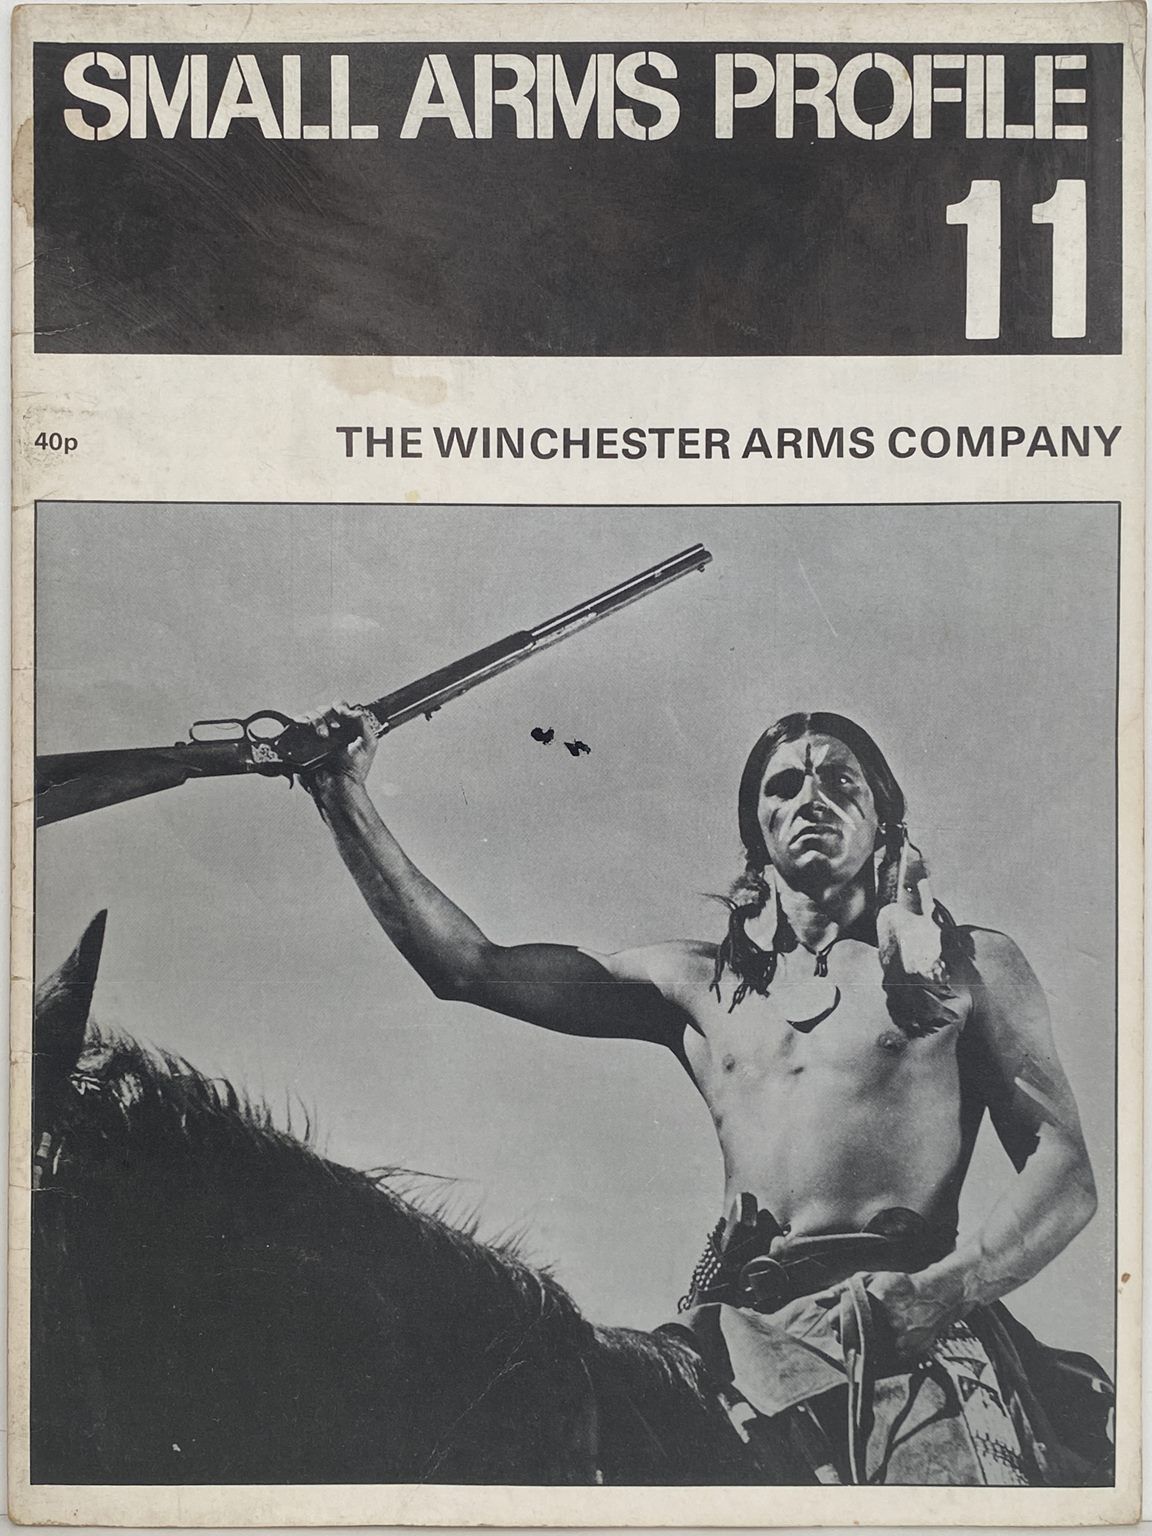 SMALL ARMS PROFILE No. 11 - The Winchester Arms Company